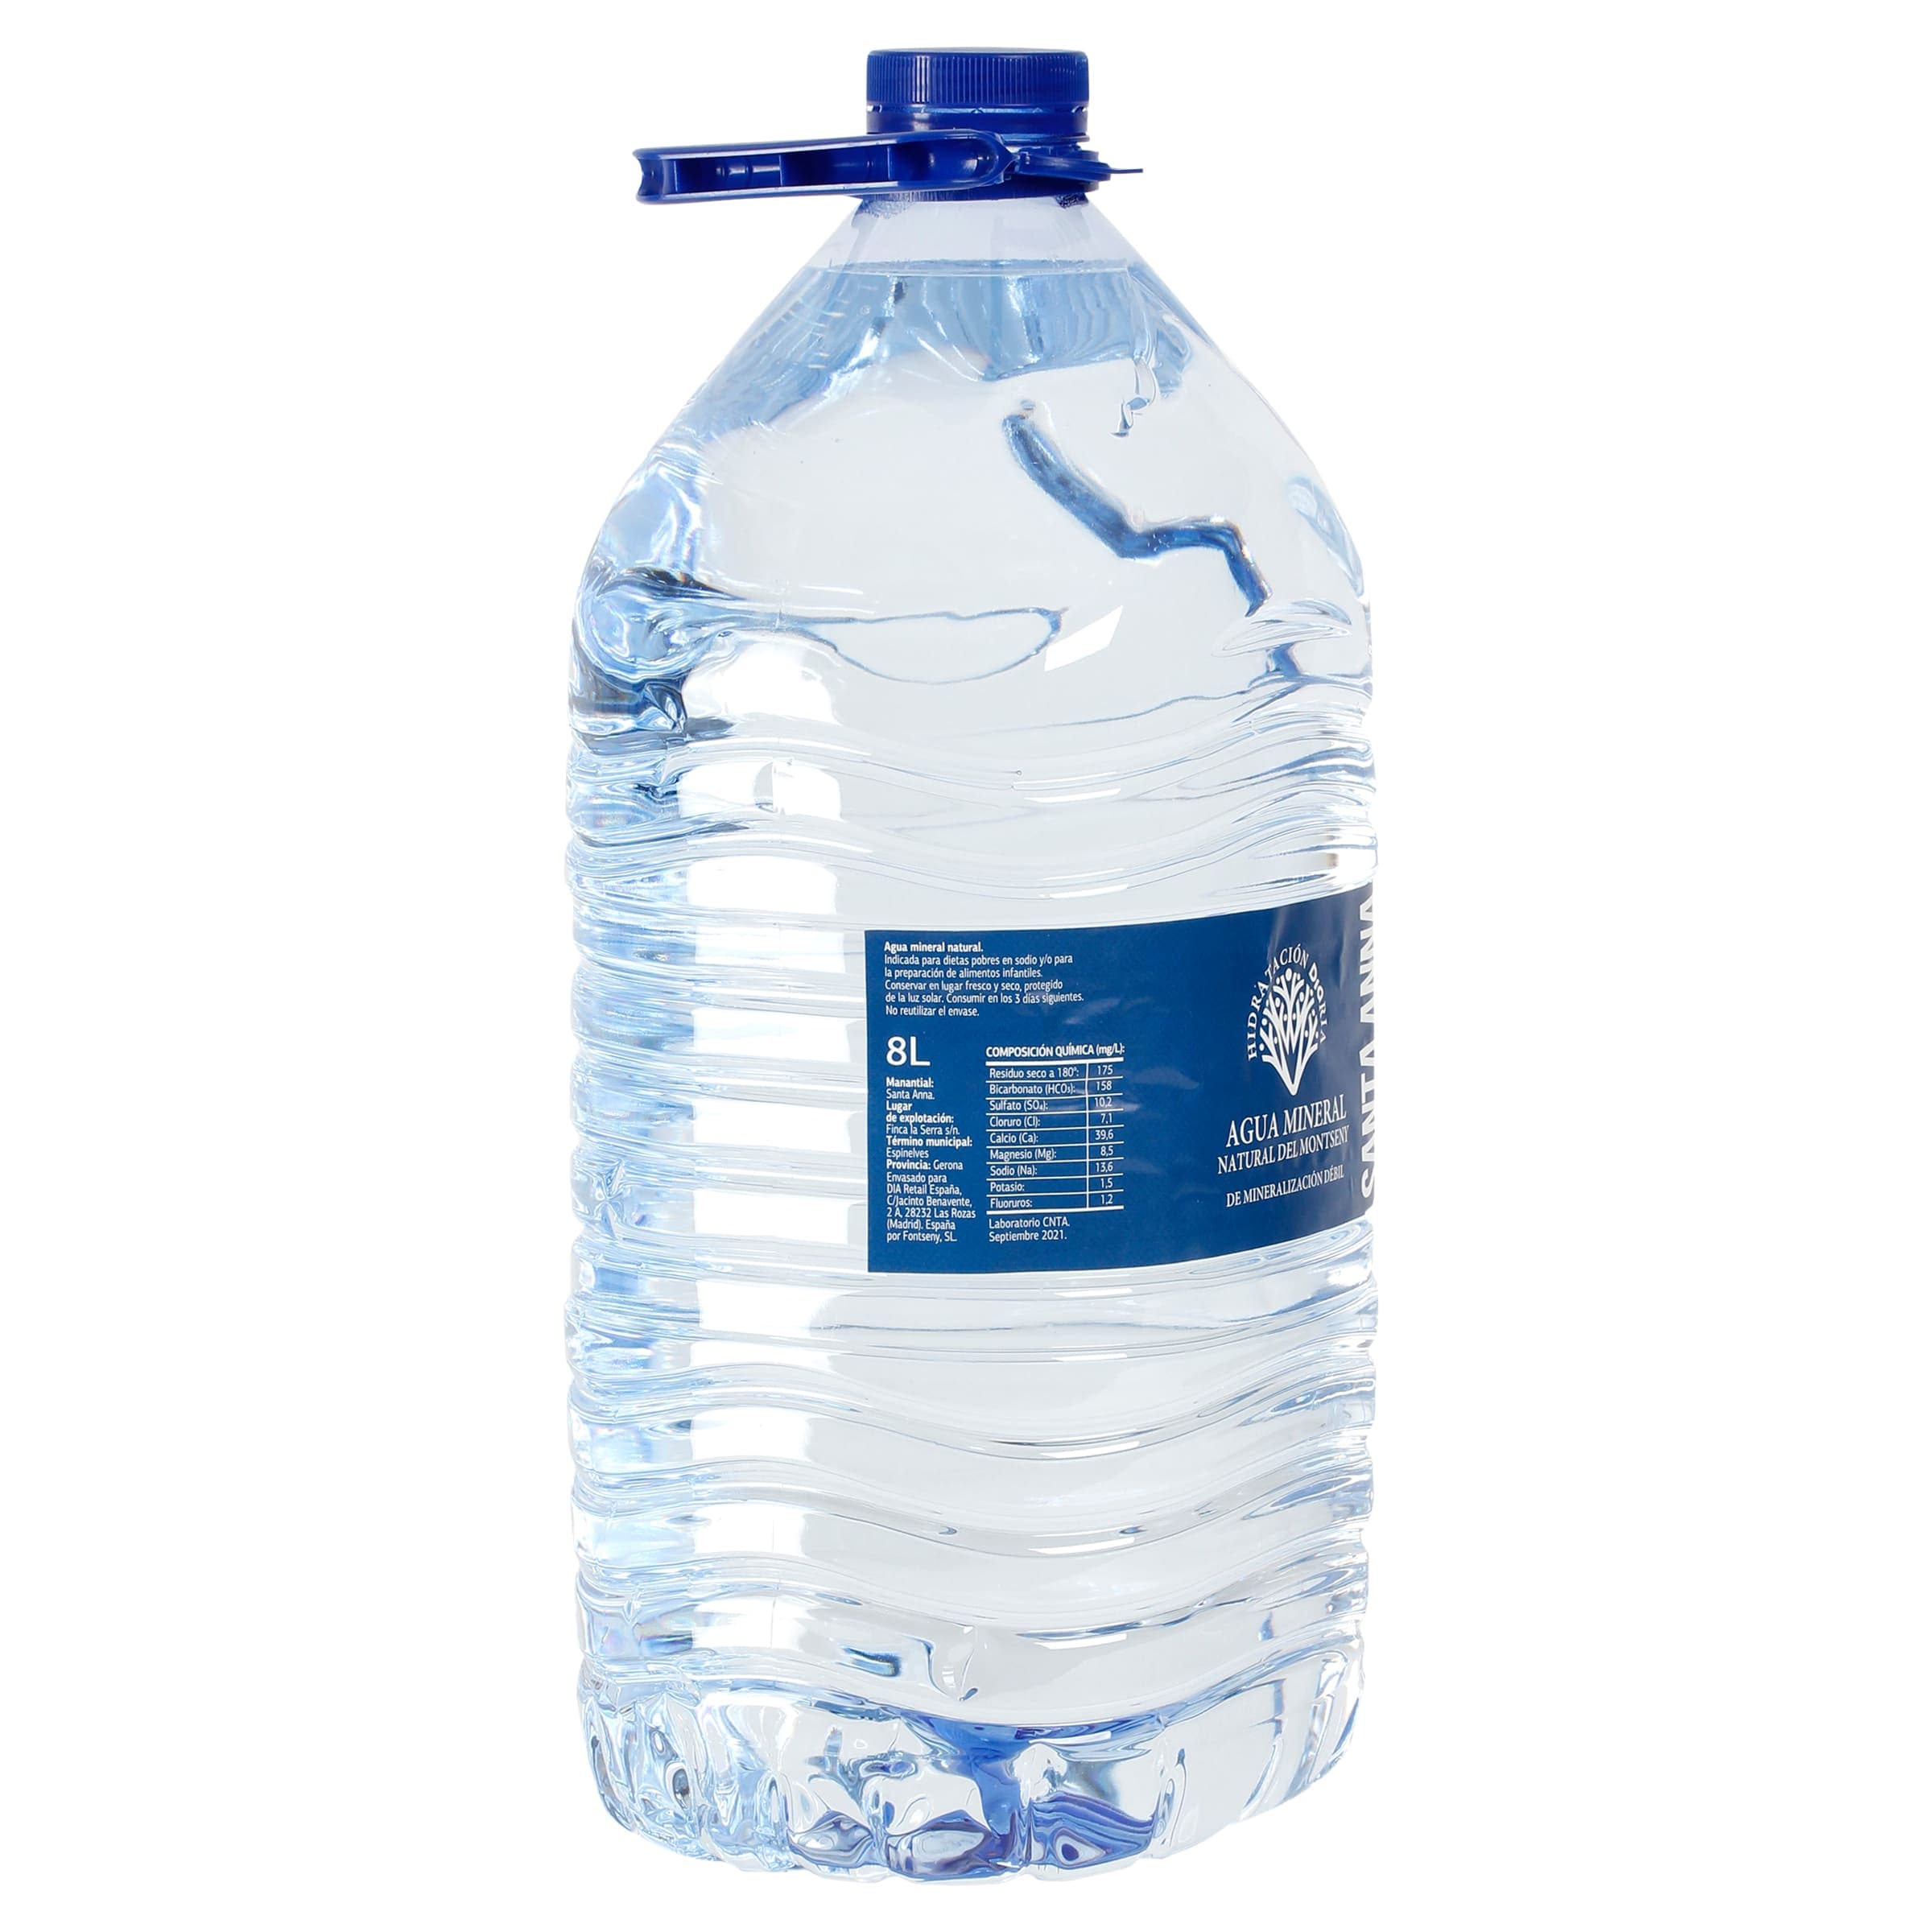 Agua mineral natural Dia garrafa 8 l